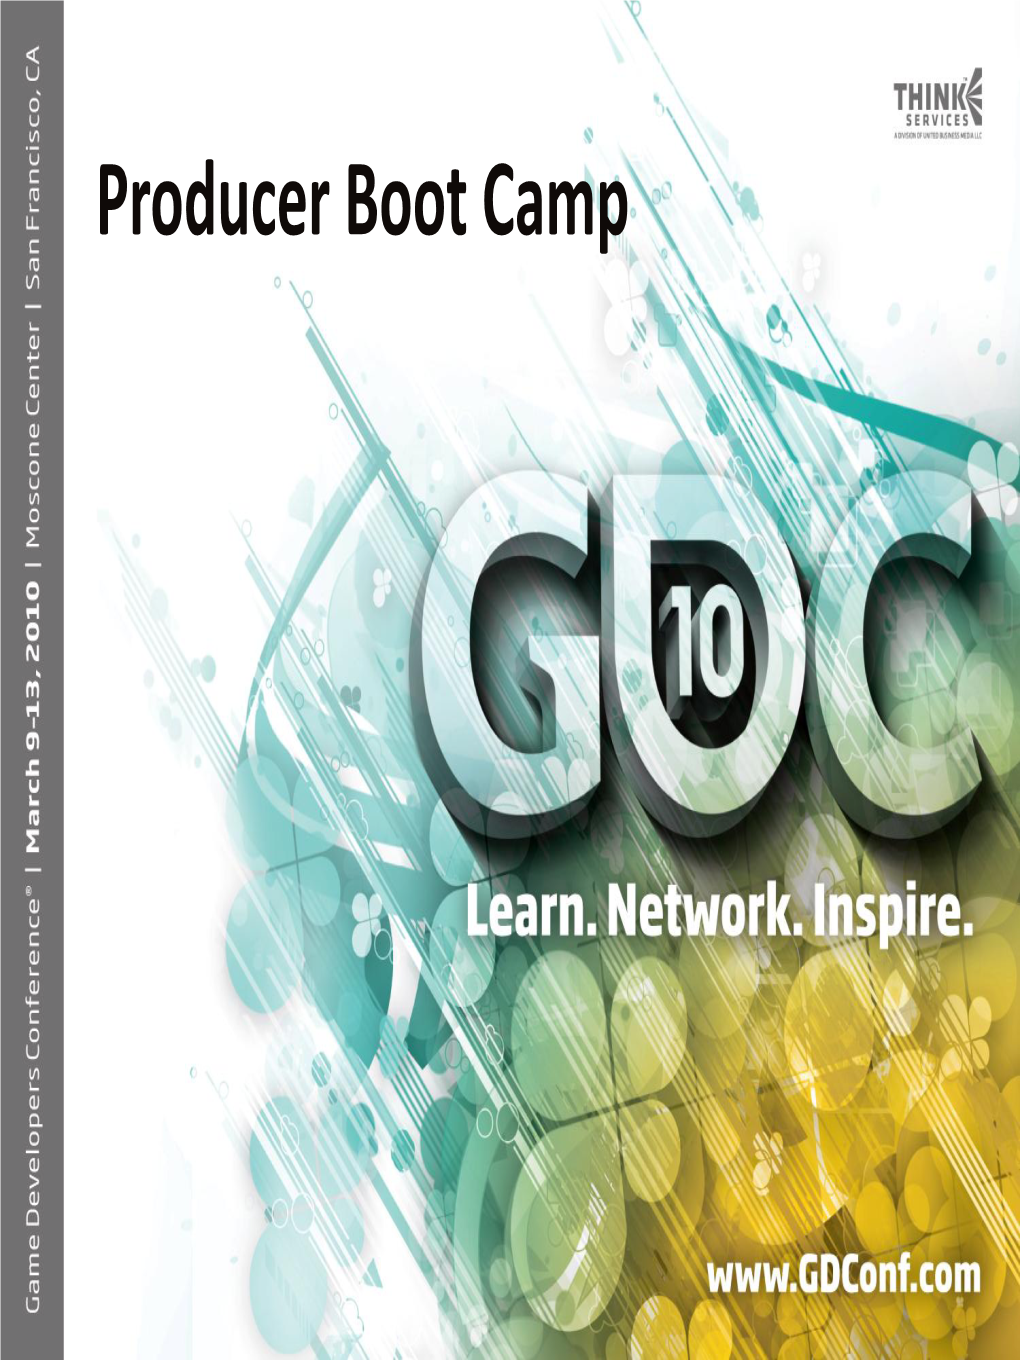 Producer Boot Camp Agenda